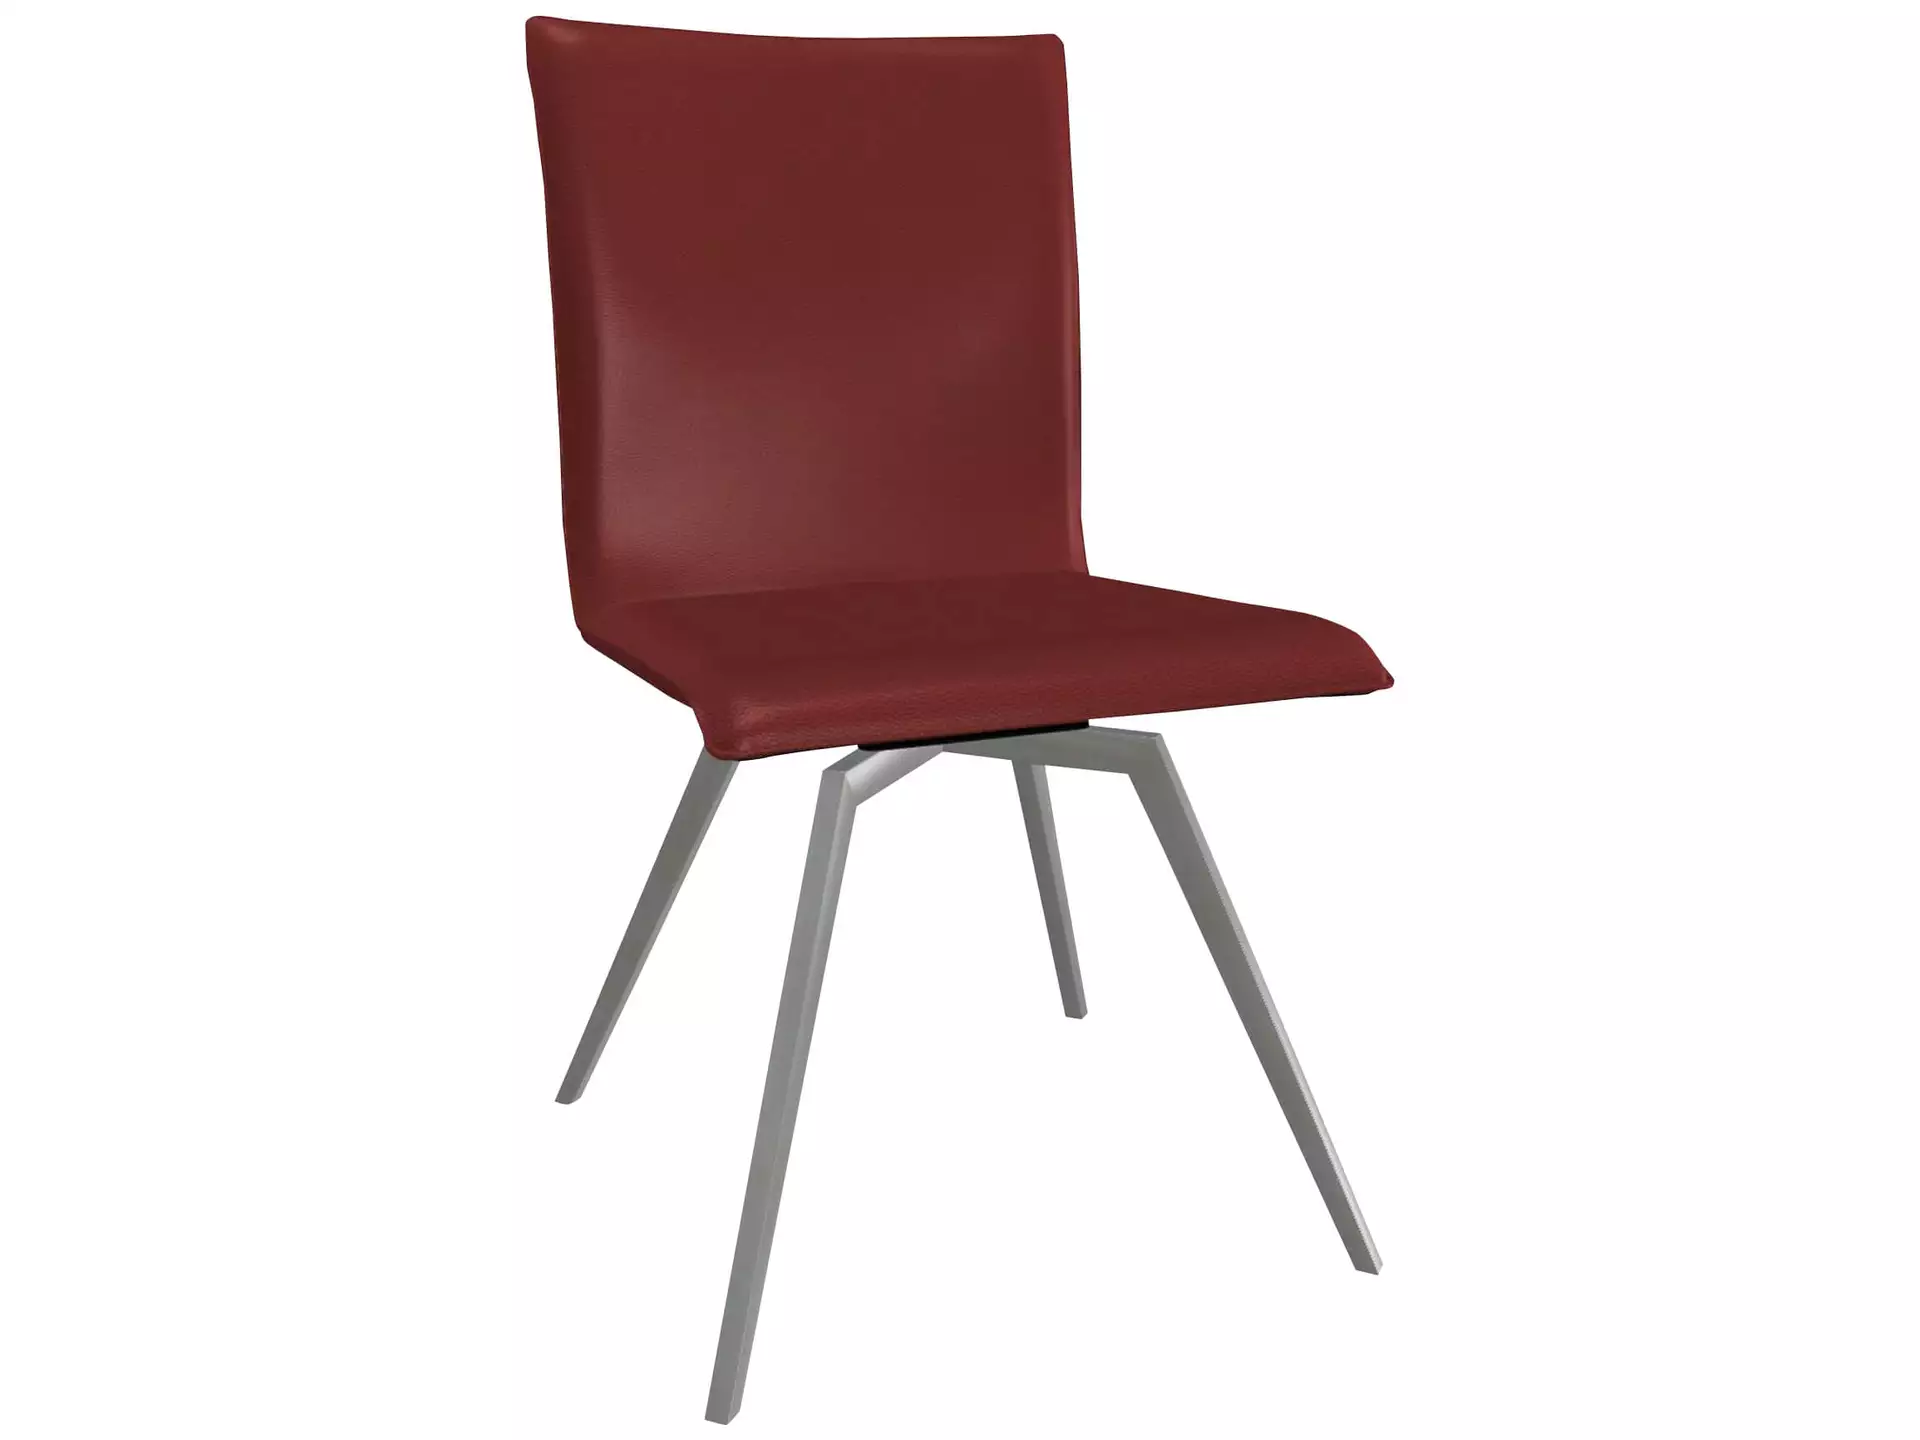 Drehstuhl Damian Trendstühle / Farbe: Red / Material: Premium-Leder